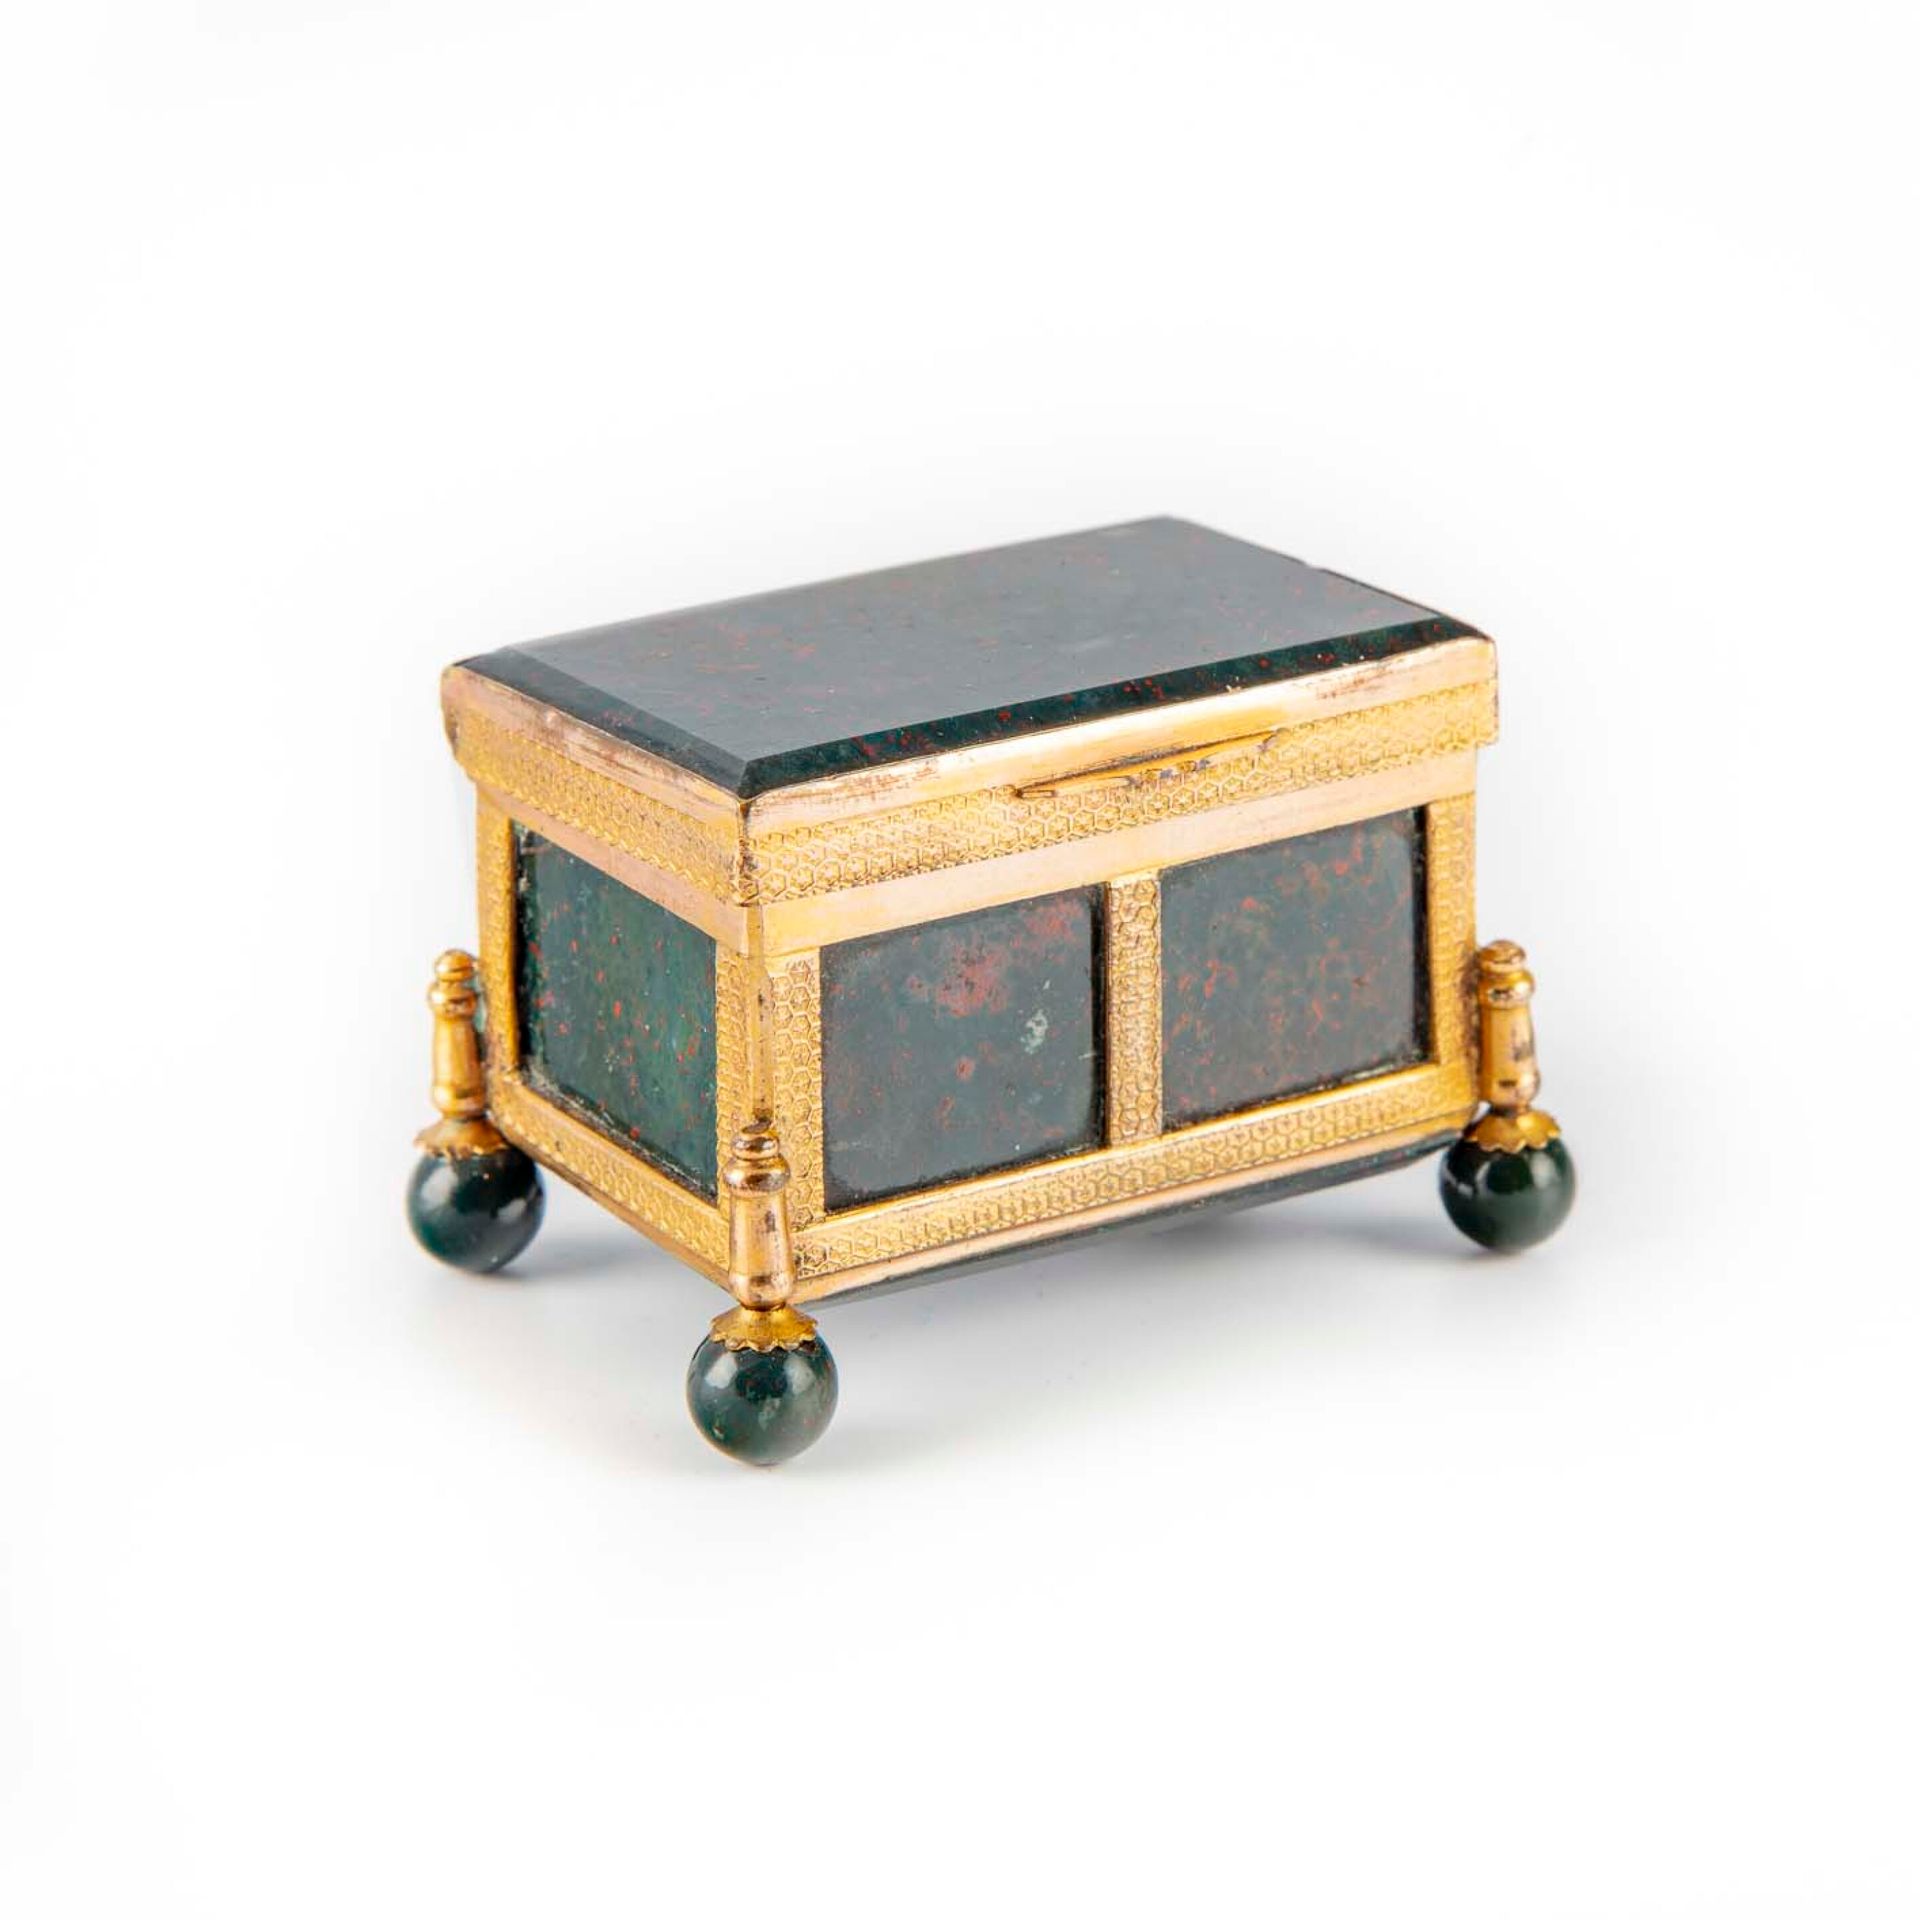 Null 小盒子，有镀金的黄铜支架和碧玉石板。它靠的是球脚。

可能是英语工作。

H.4; W. 6; D. 4 cm